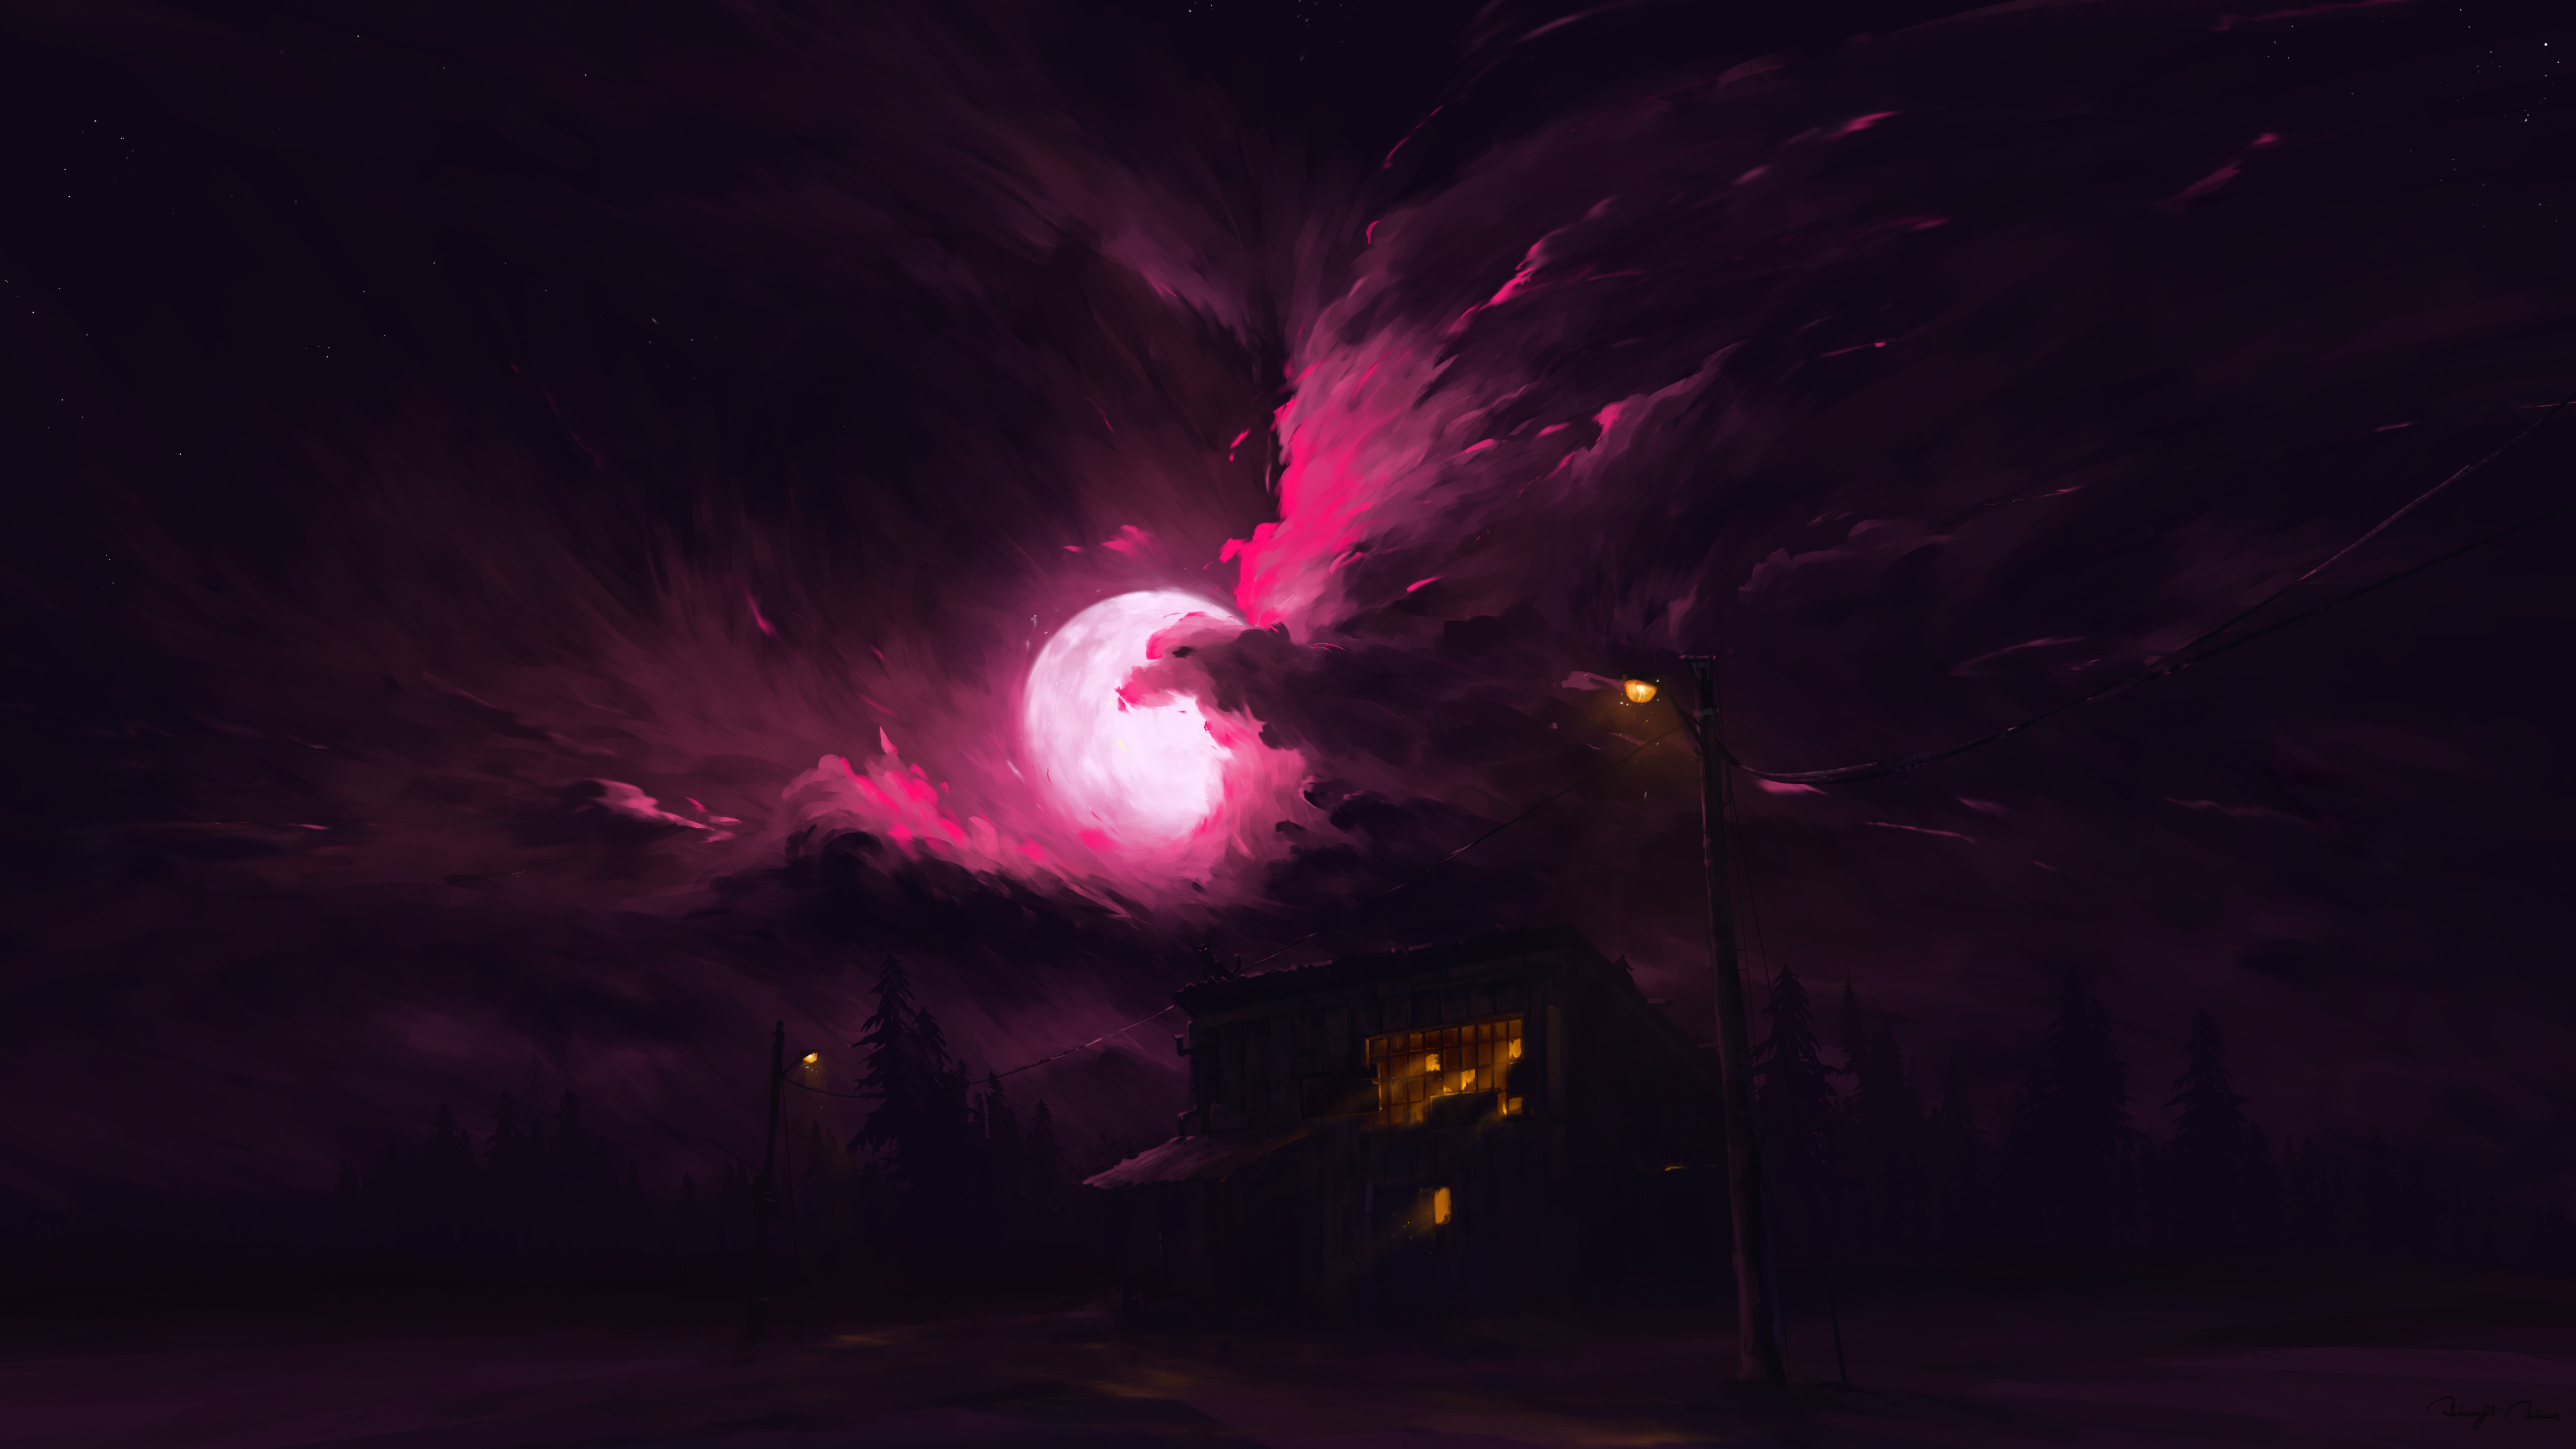 BisBiswas Digital Art Artwork Illustration Landscape Clouds Night Nightscape Moon Trees Forest Stars 3840x2160